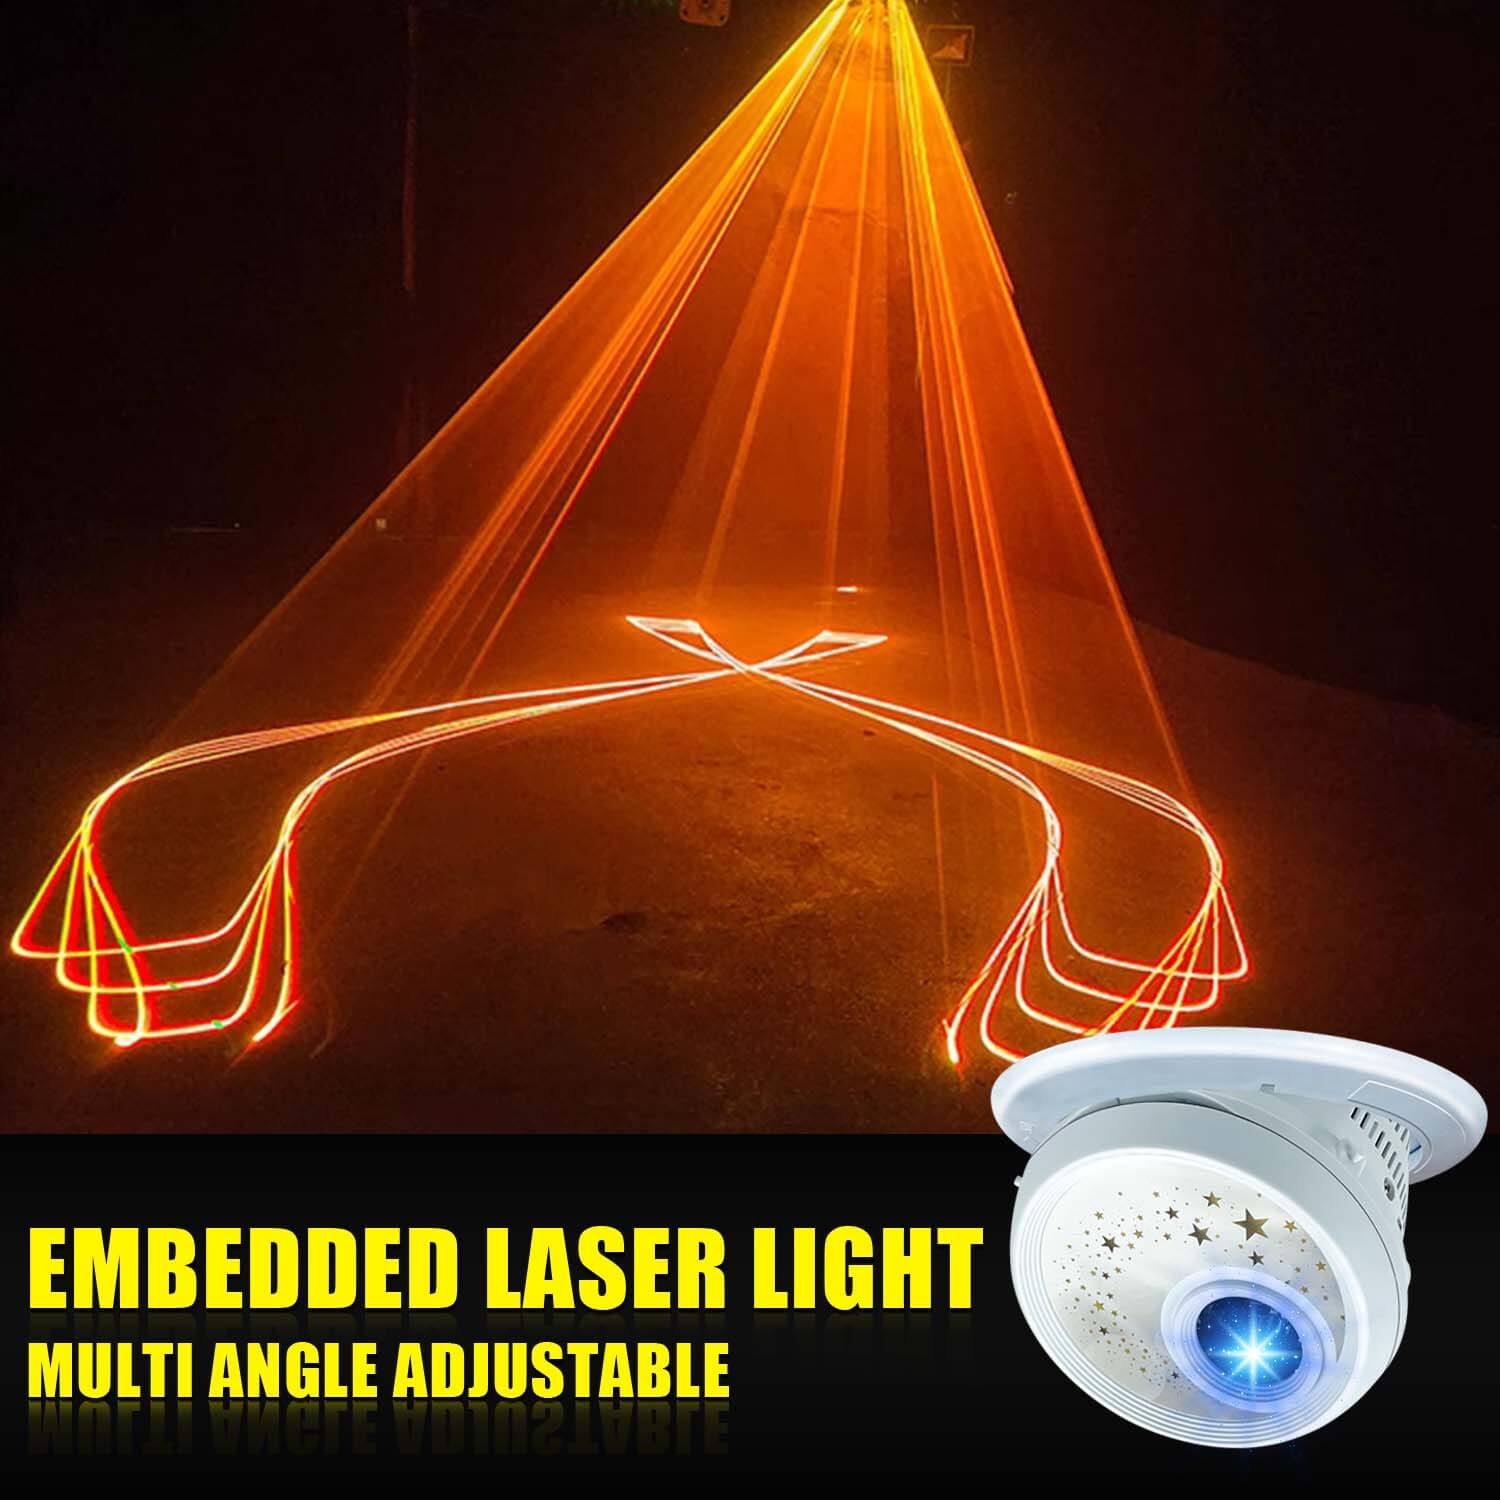 50W laser light